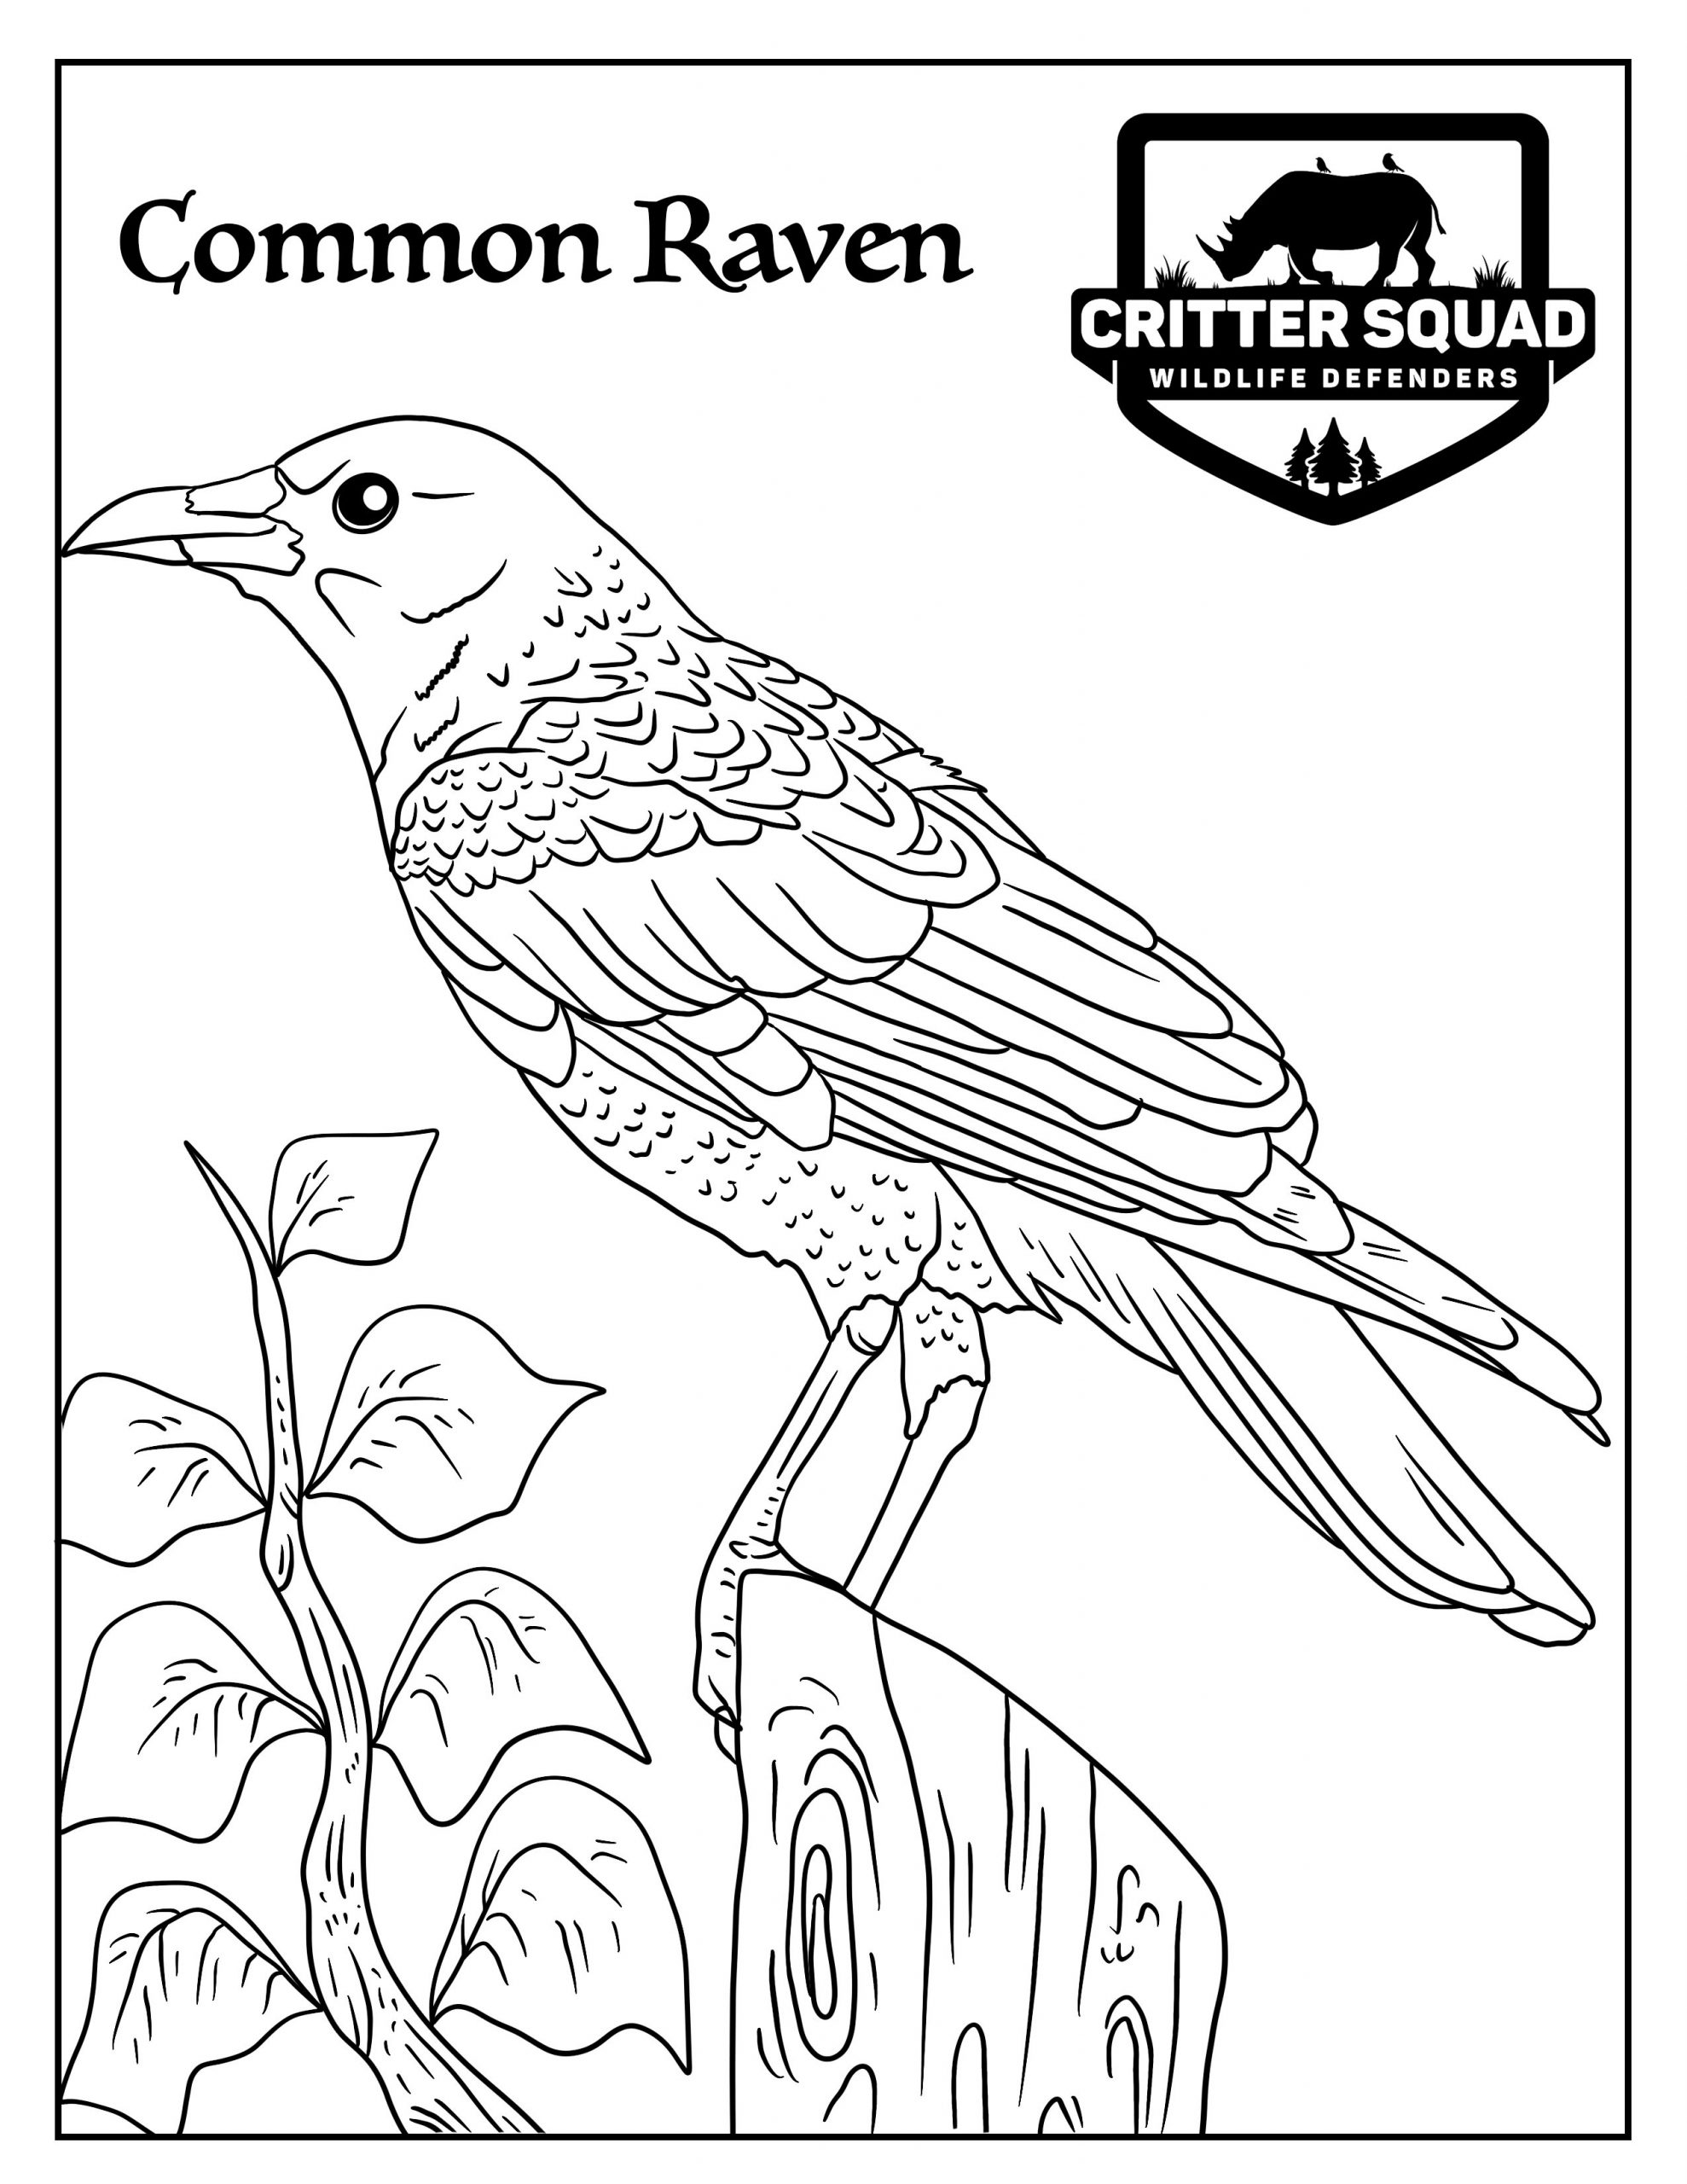 Mon raven coloring page